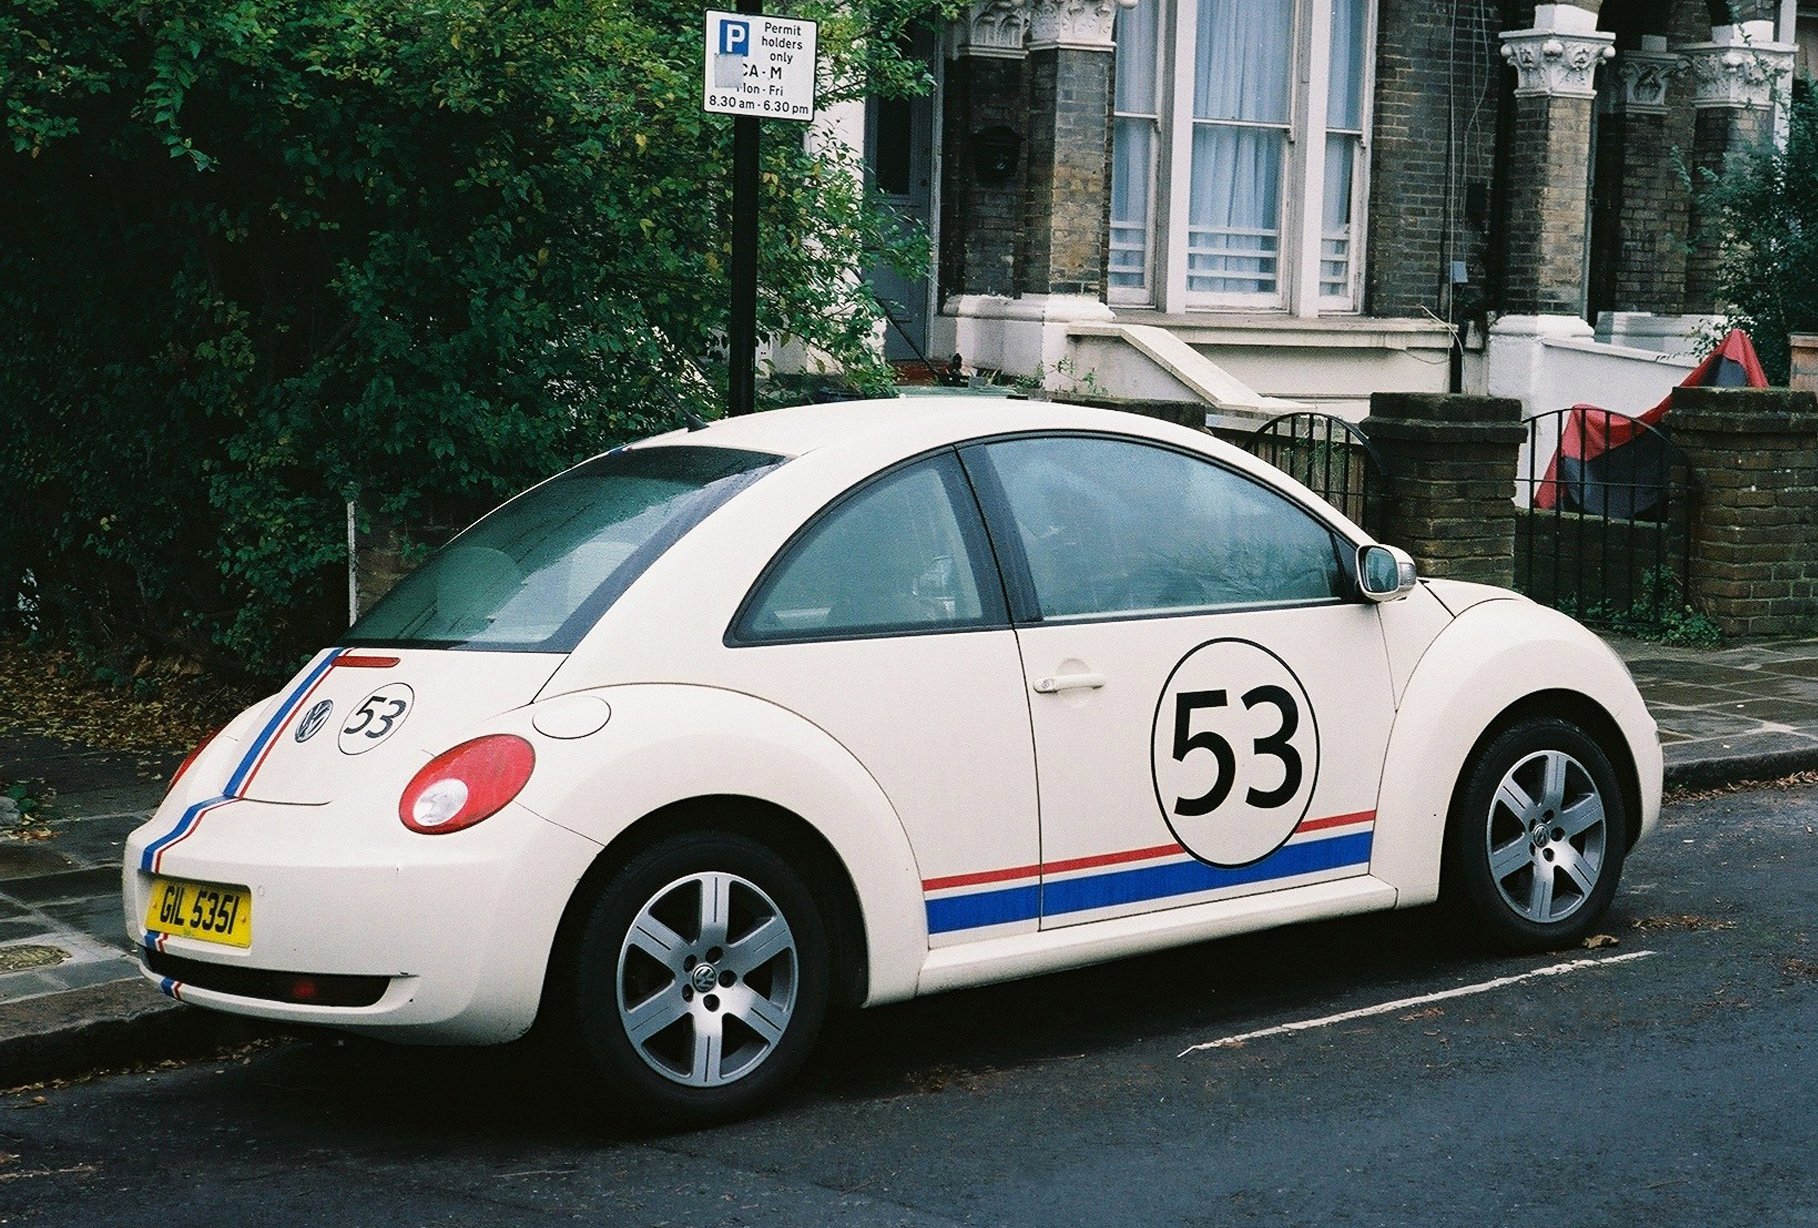  VW 53 Edition in London - UK 